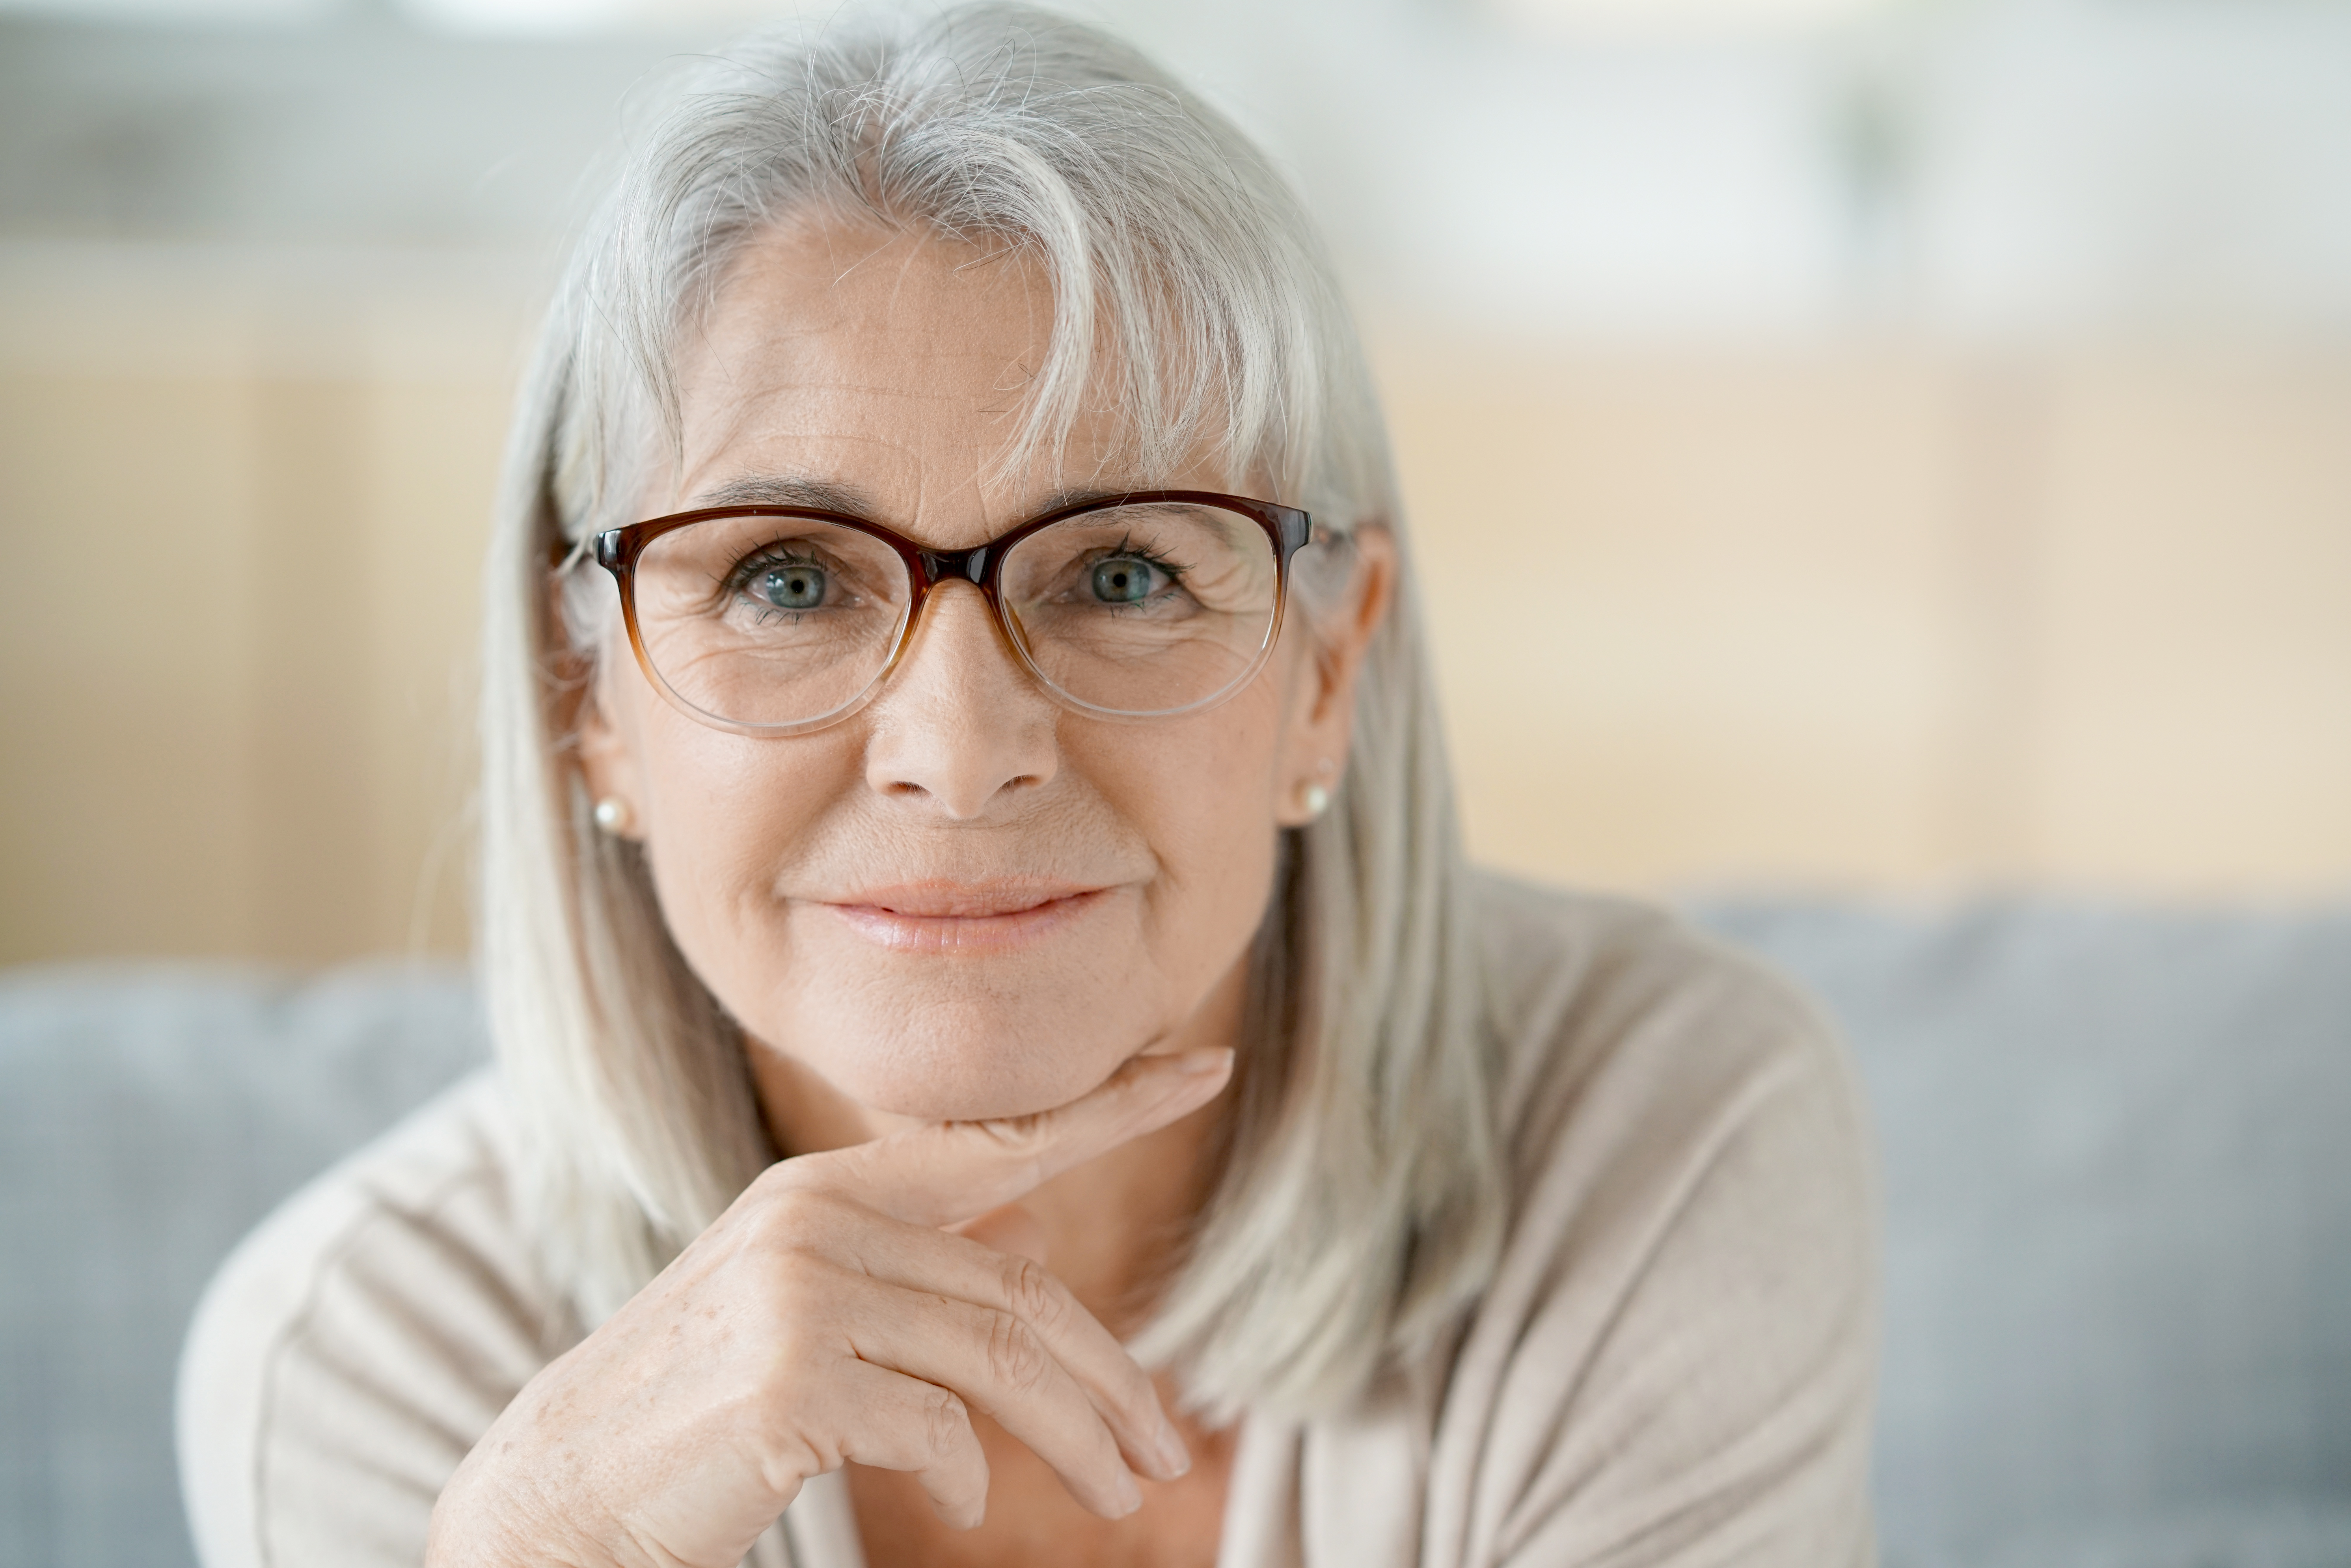 An older lady | Source: Shutterstock